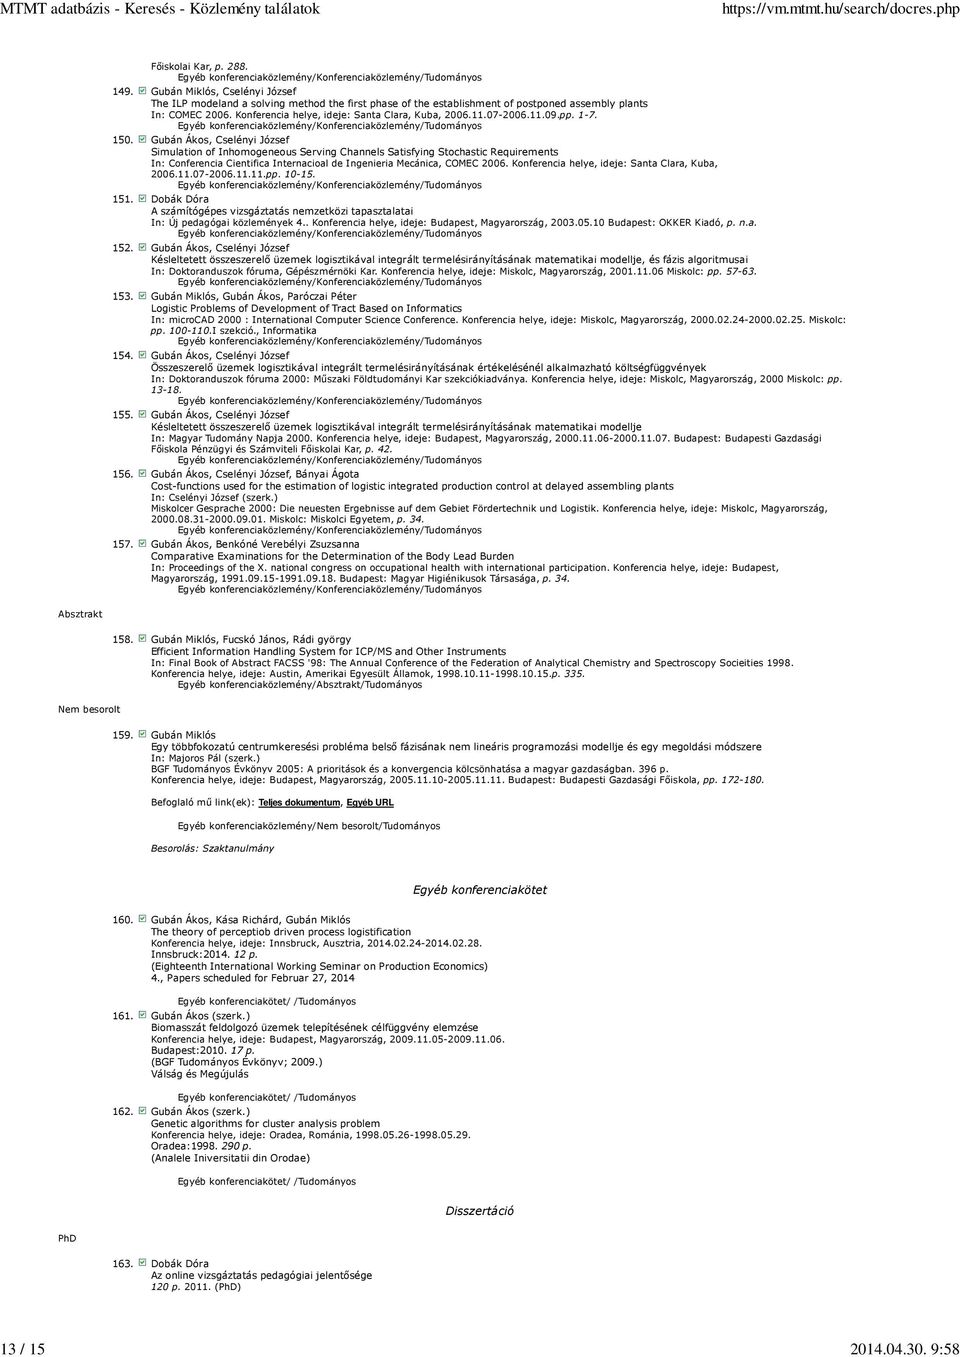 Gubán Ákos, Cselényi József Simulation of Inhomogeneous Serving Channels Satisfying Stochastic Requirements In: Conferencia Cientifica Internacioal de Ingenieria Mecánica, COMEC 2006.